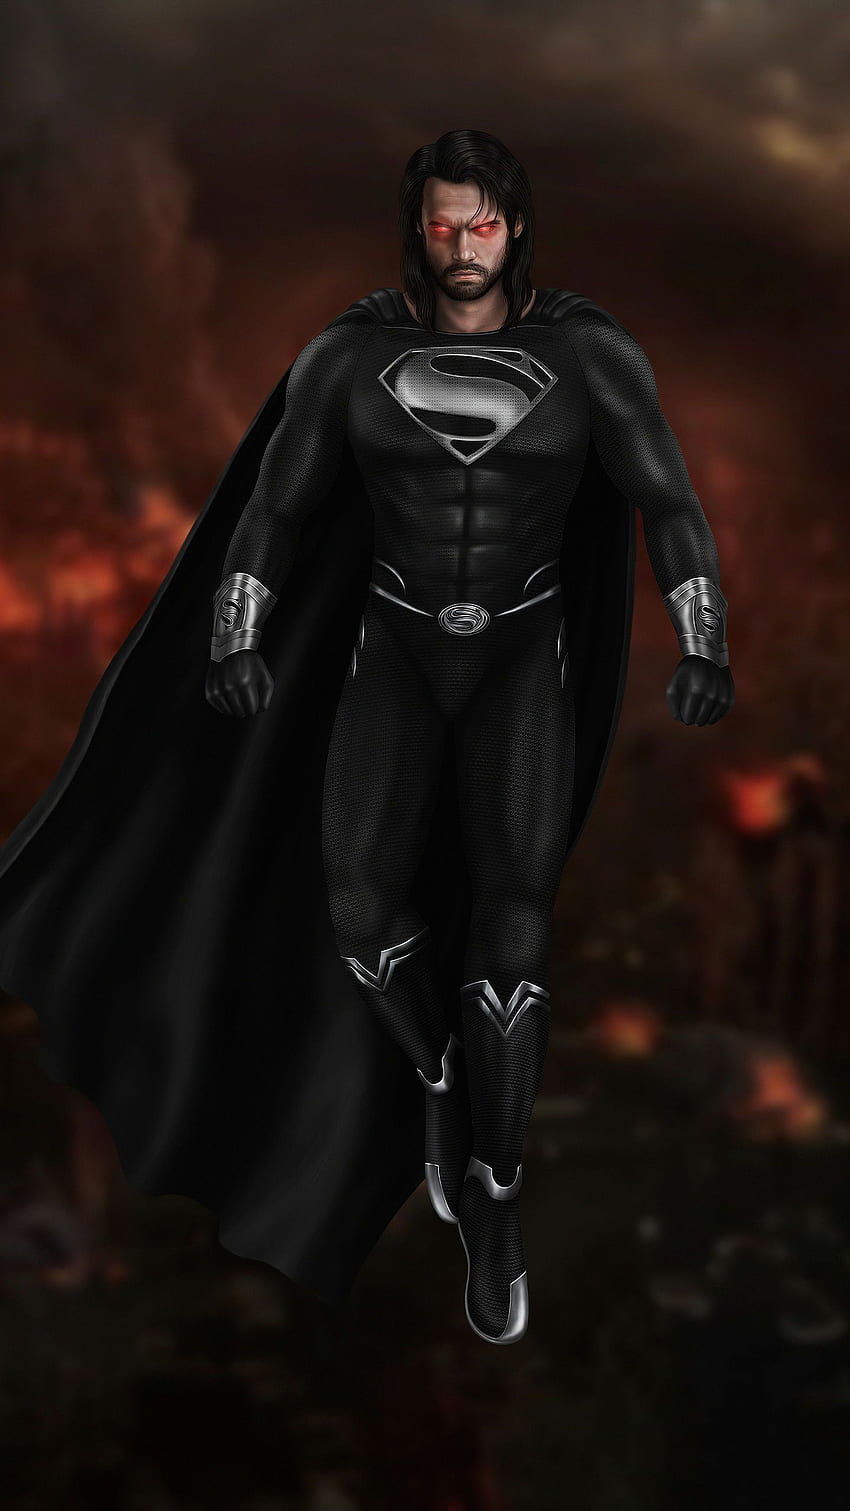 Superman Heat Vision DC Superhero 4K wallpaper download